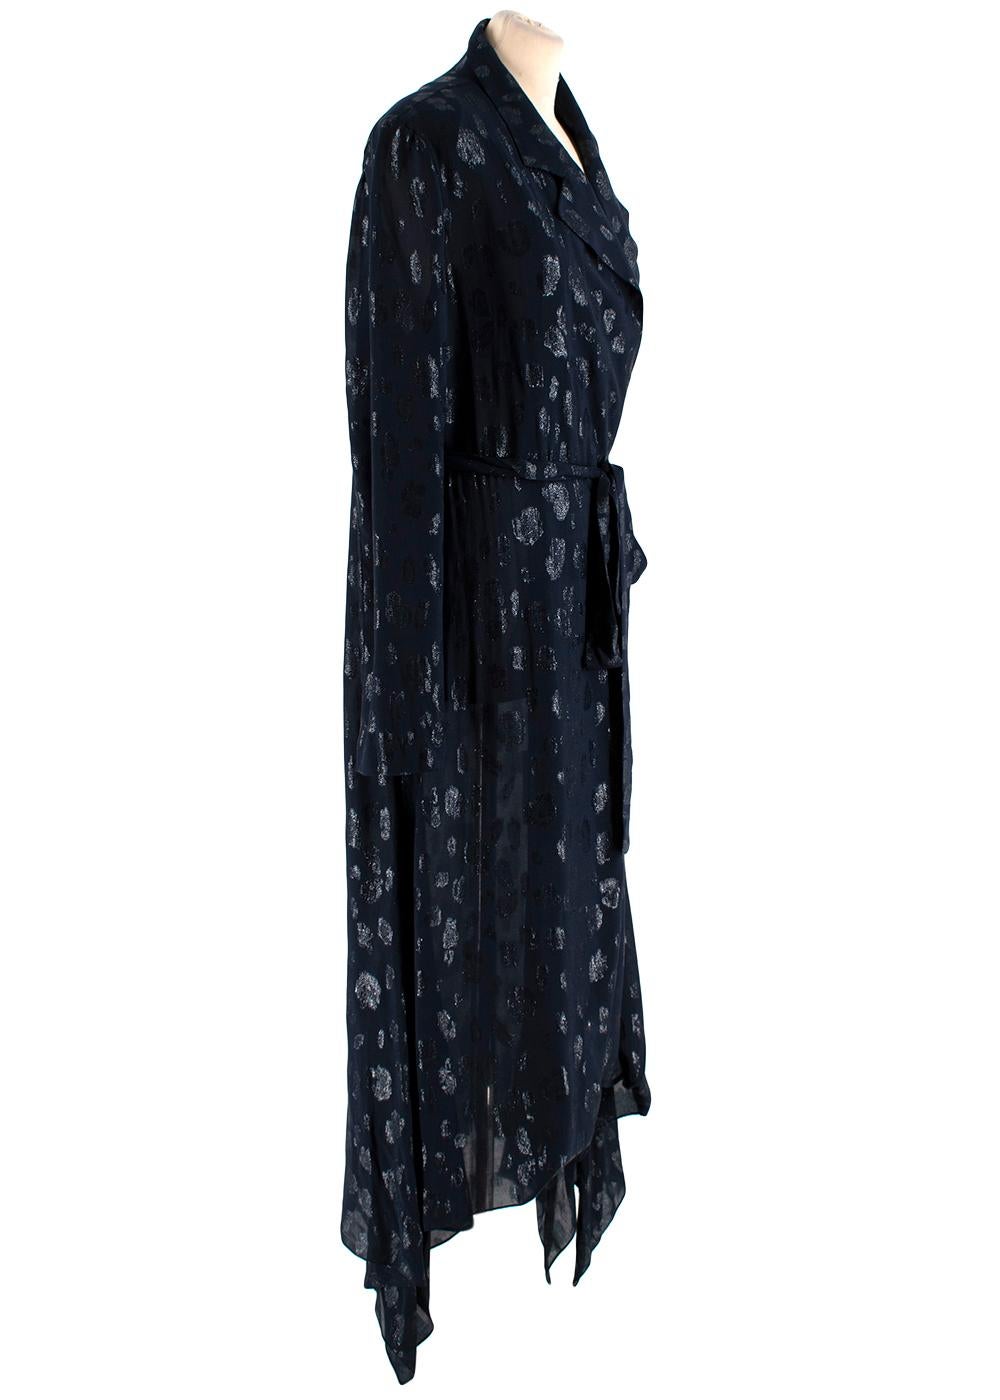 Cushnie Et Ochs Navy Metallic Embroidered Wrap Dress

- Navy long-sleeve design
- Blue metallic embroidered detailing 
- Maxi length 
- Notched collar
- Padded shoulders 
- Wrap tie waist 
- Silk lining 

Materials: 
Main - 90% Viscose, 10%